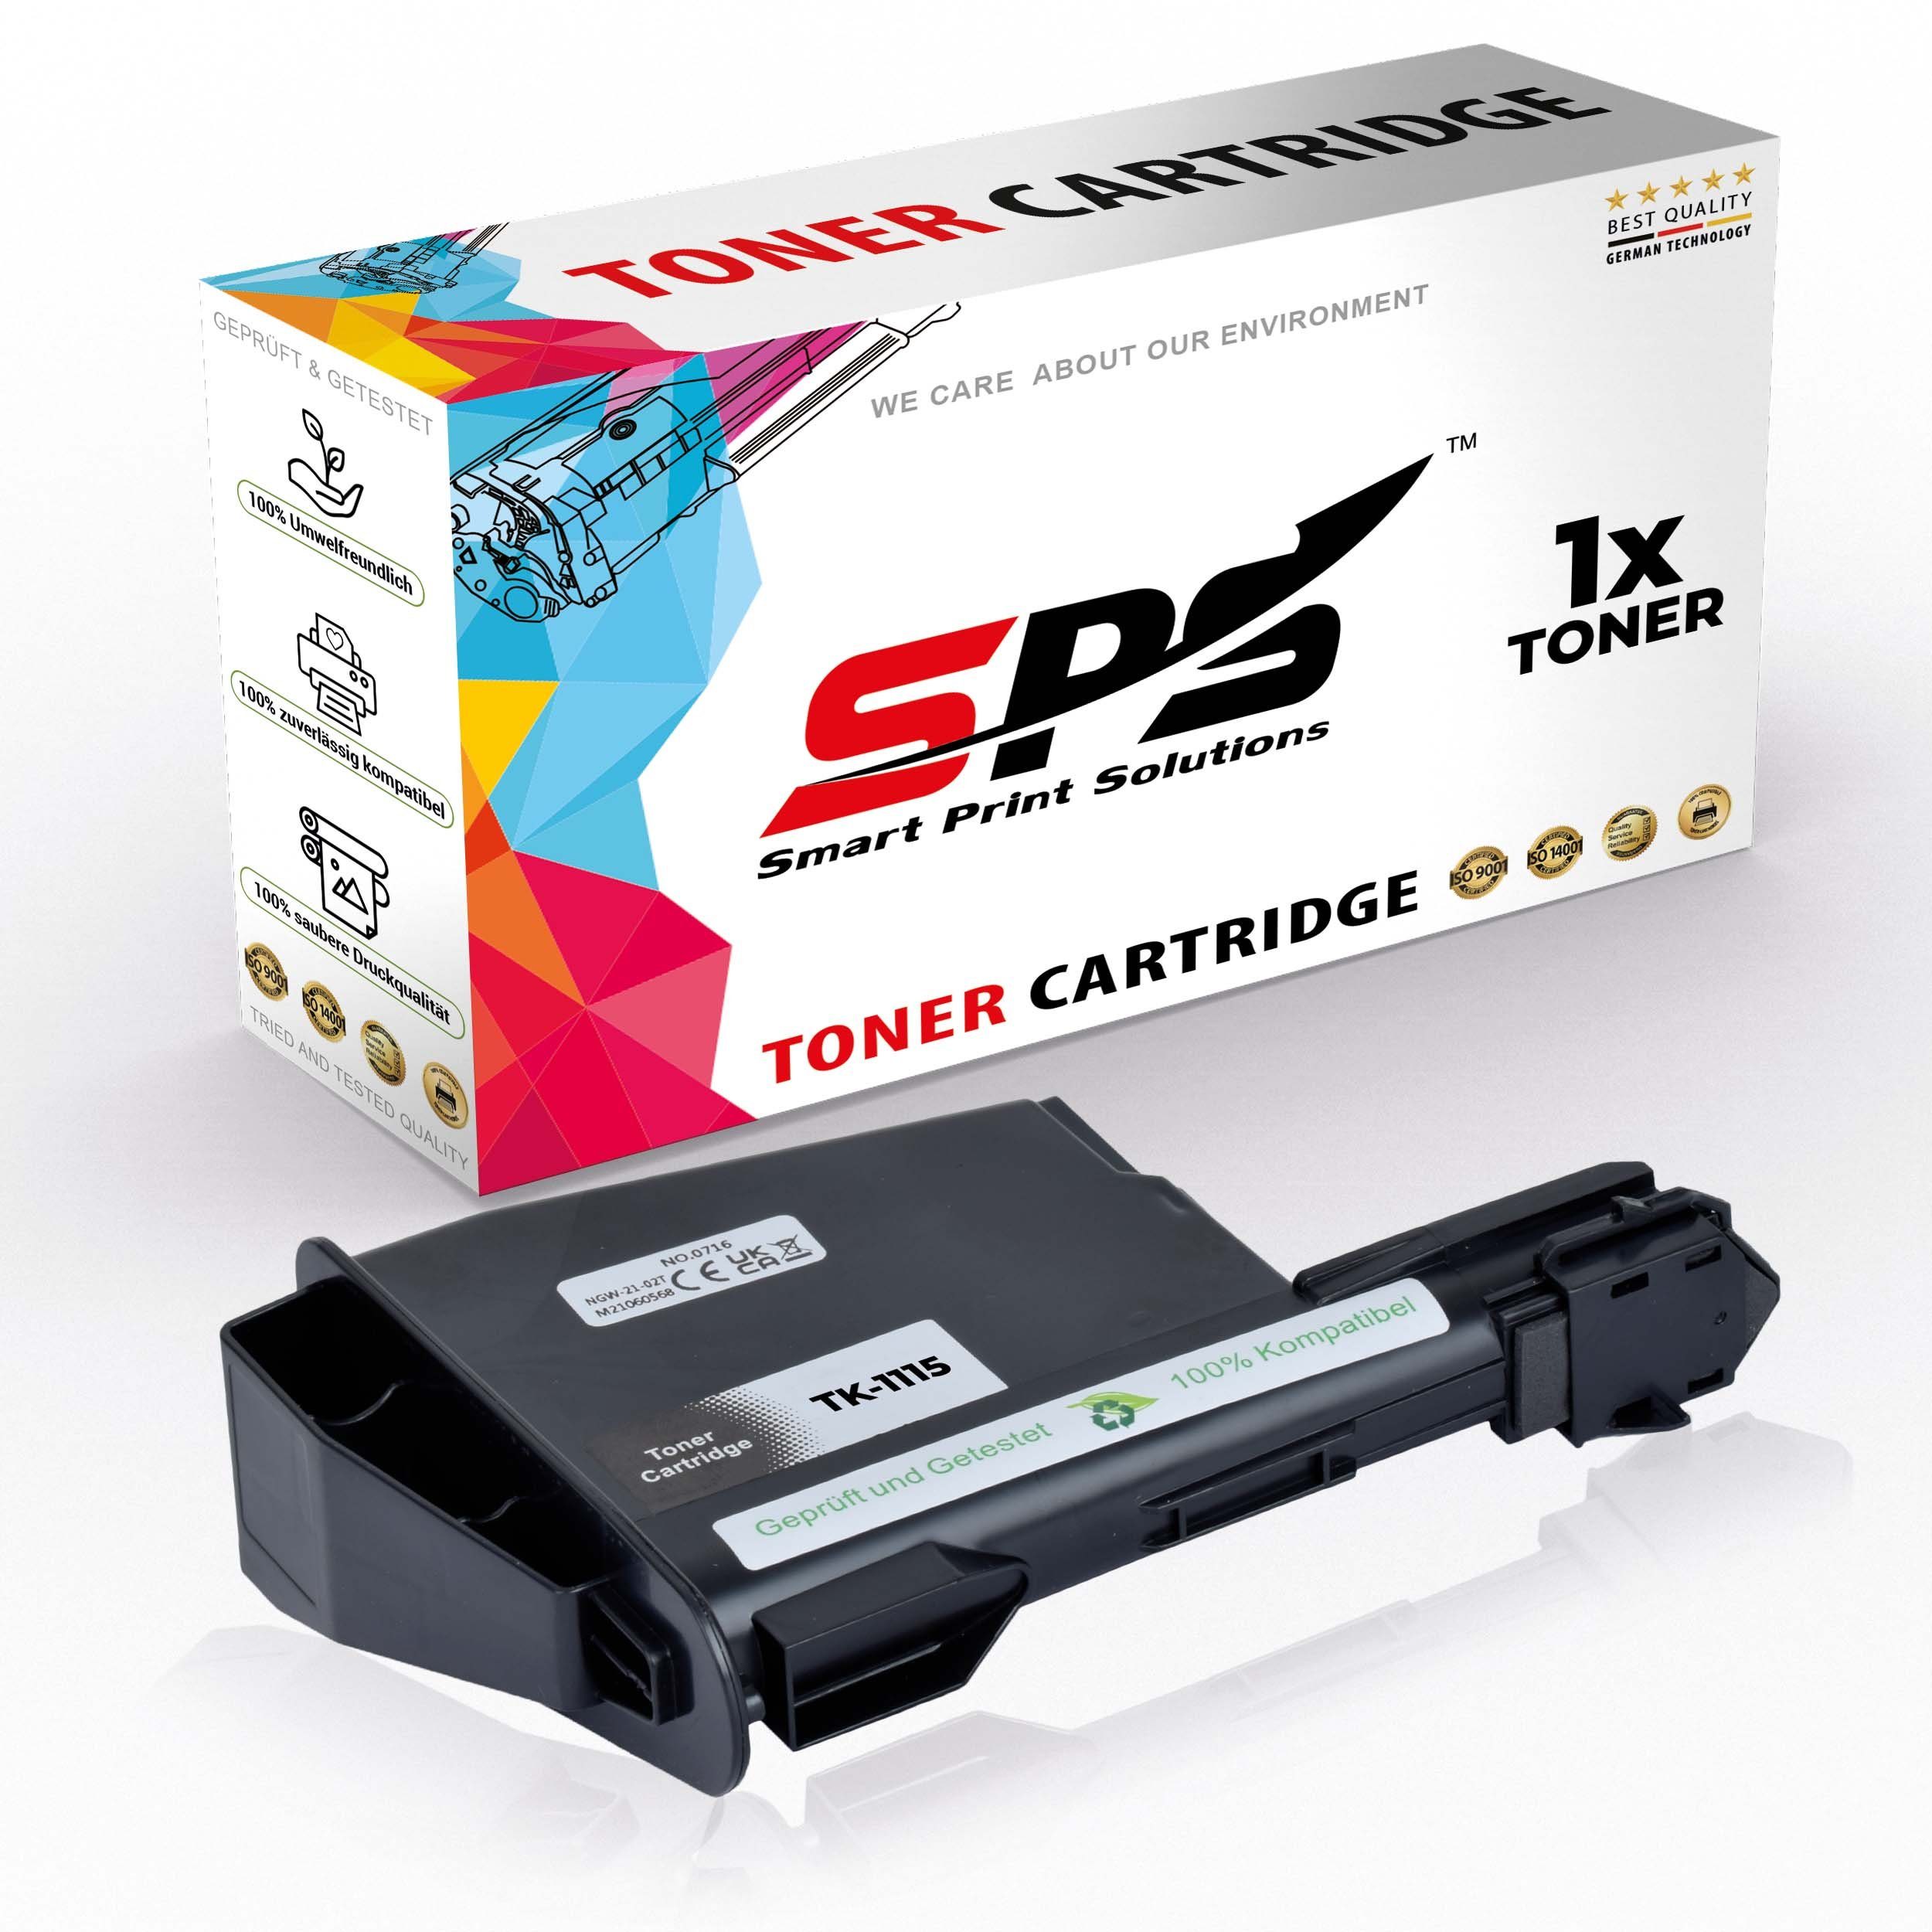 SPS Tonerkartusche Kompatibel für Kyocera FS1220 MFP (1102M43NL0), (1er Pack)